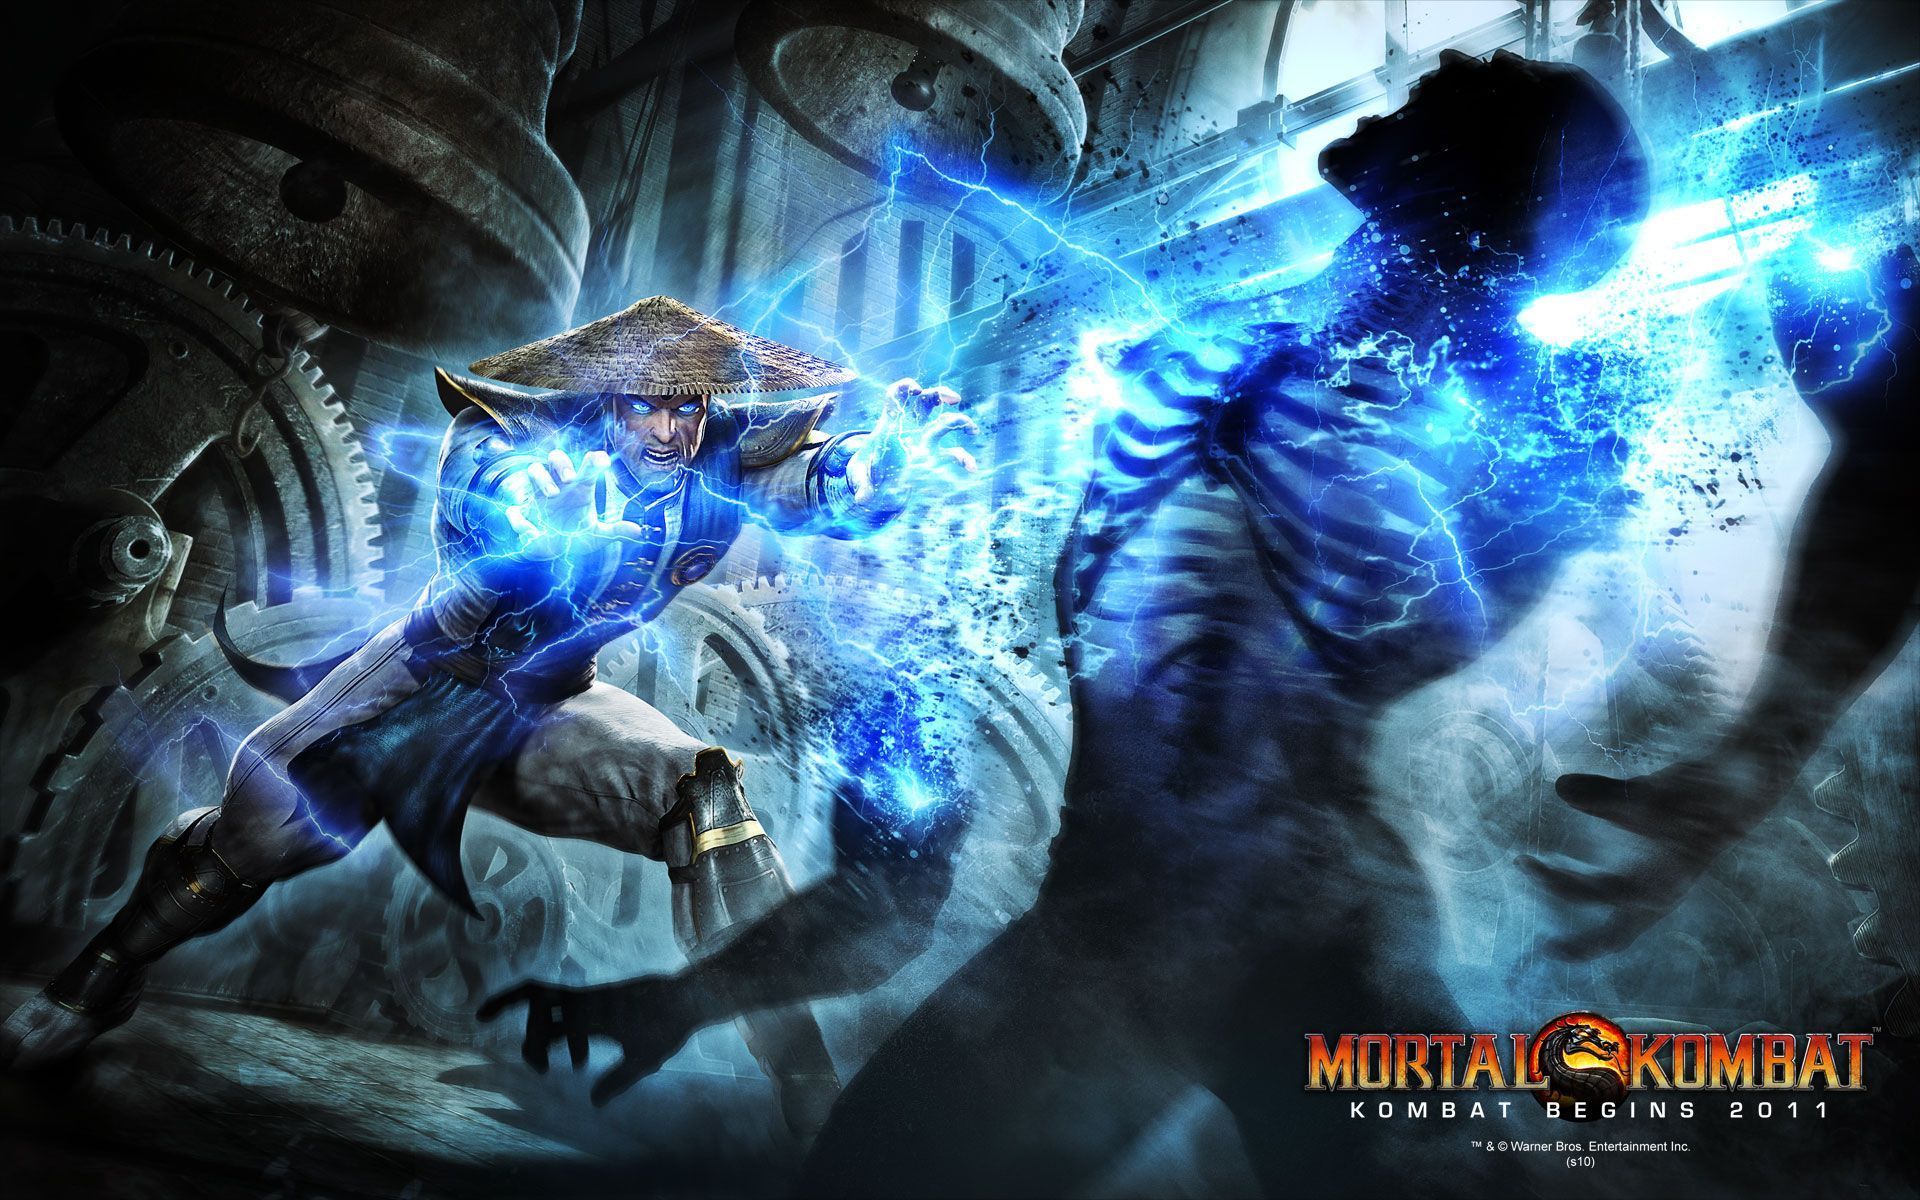 Raiden in Mortal Kombat Begins 2011 Wallpapers | HD Wallpapers